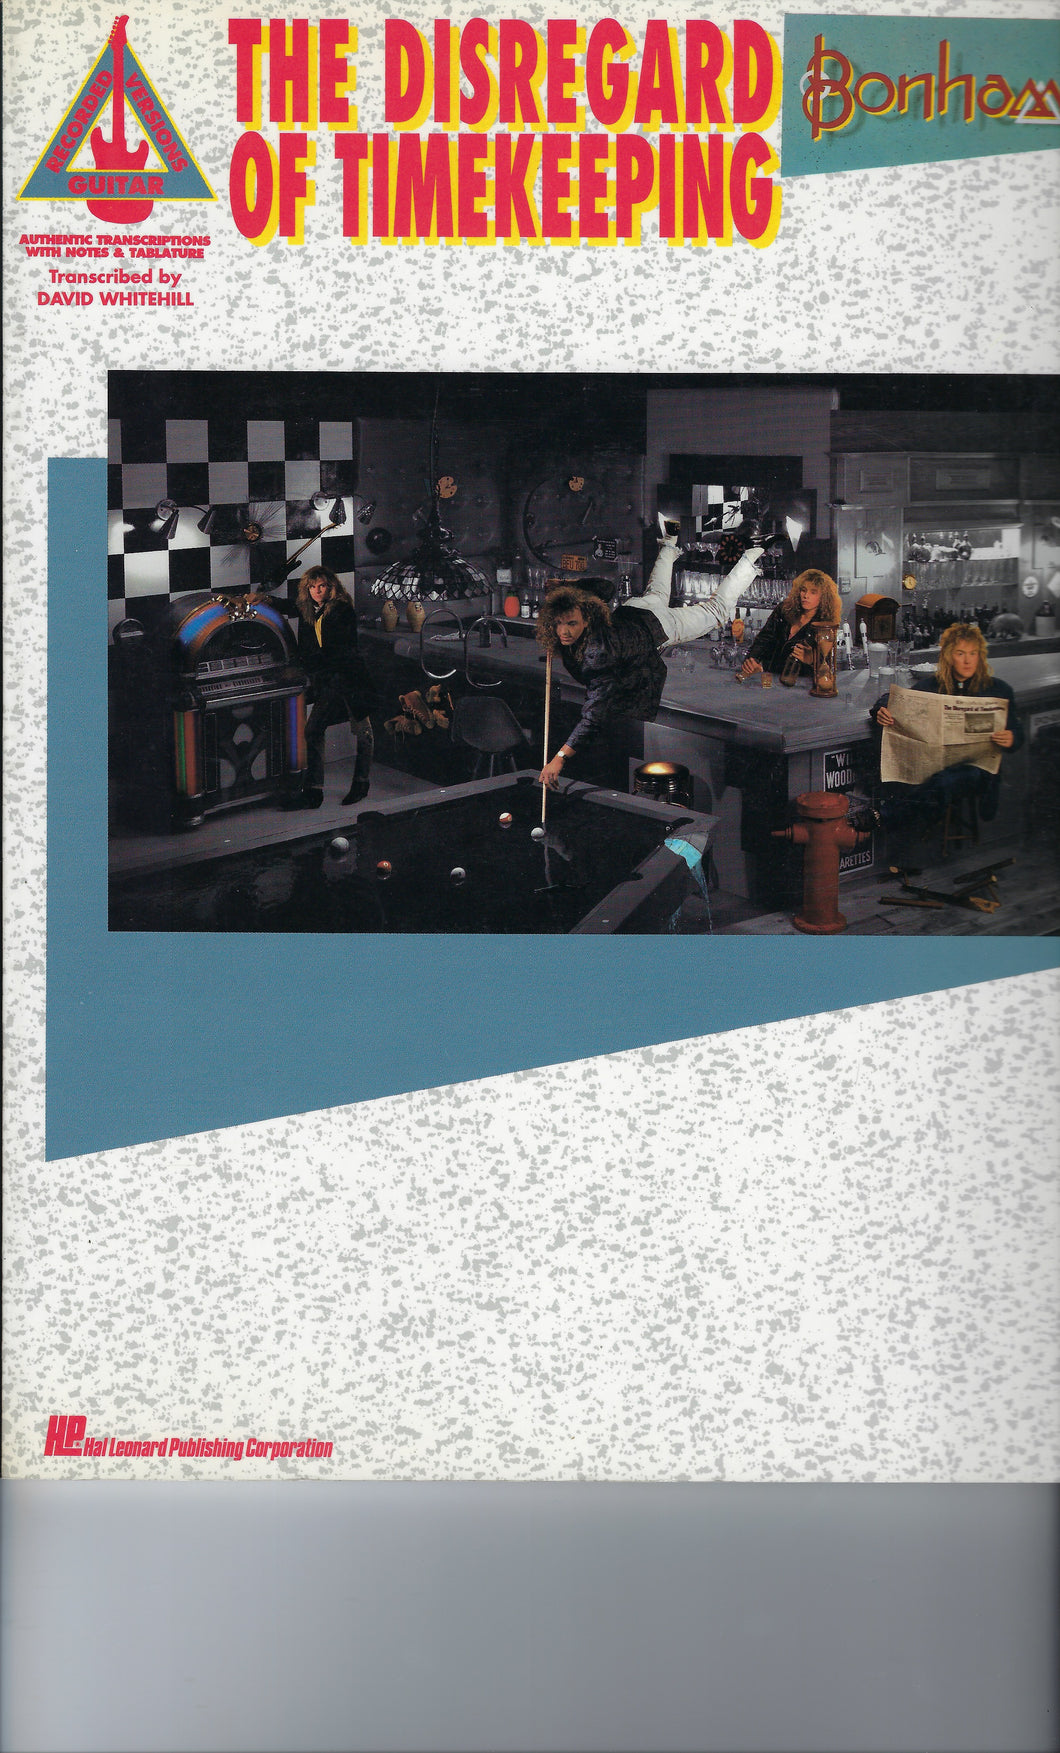 Hal Leonard Bonham The Disregard of Timekeeping, Guitar Tab 1991